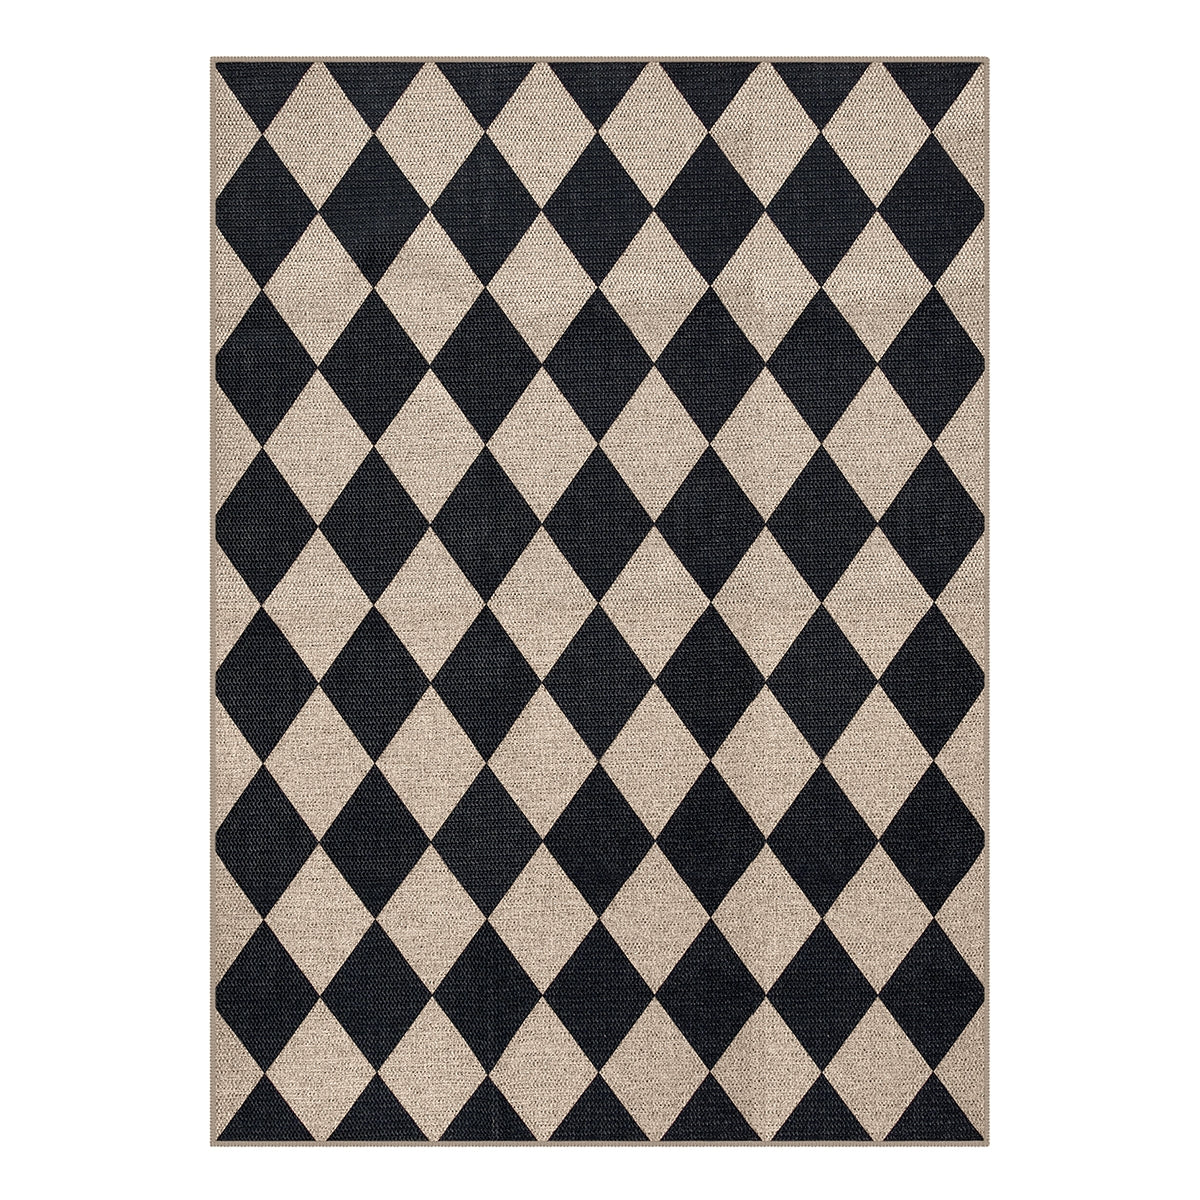 checkered jute rug